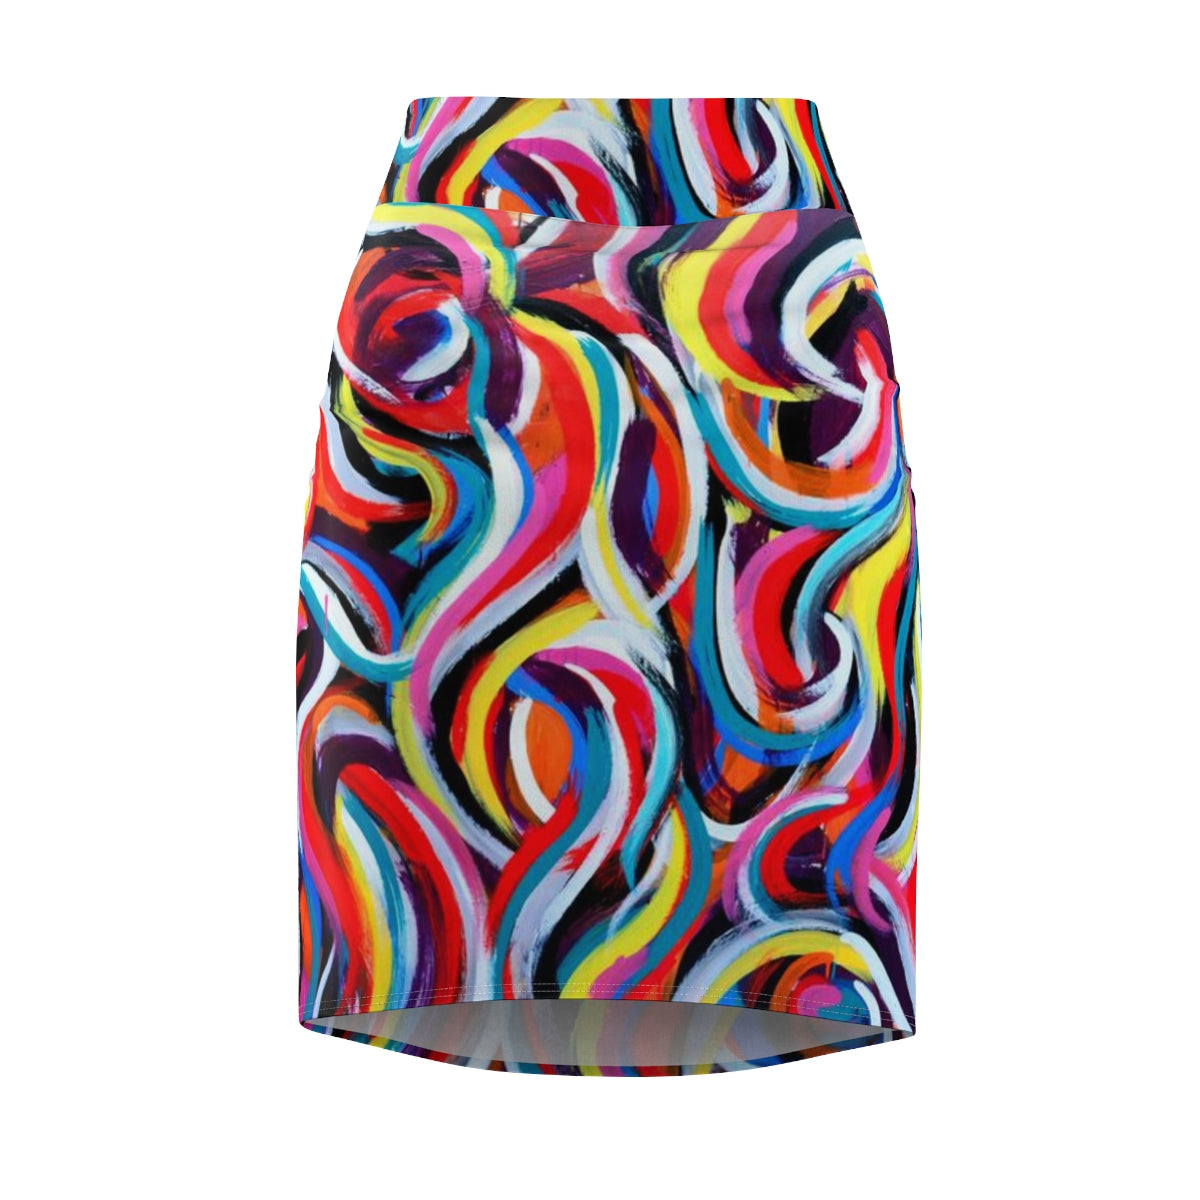 Women's Pencil Skirt - Multi color swirls